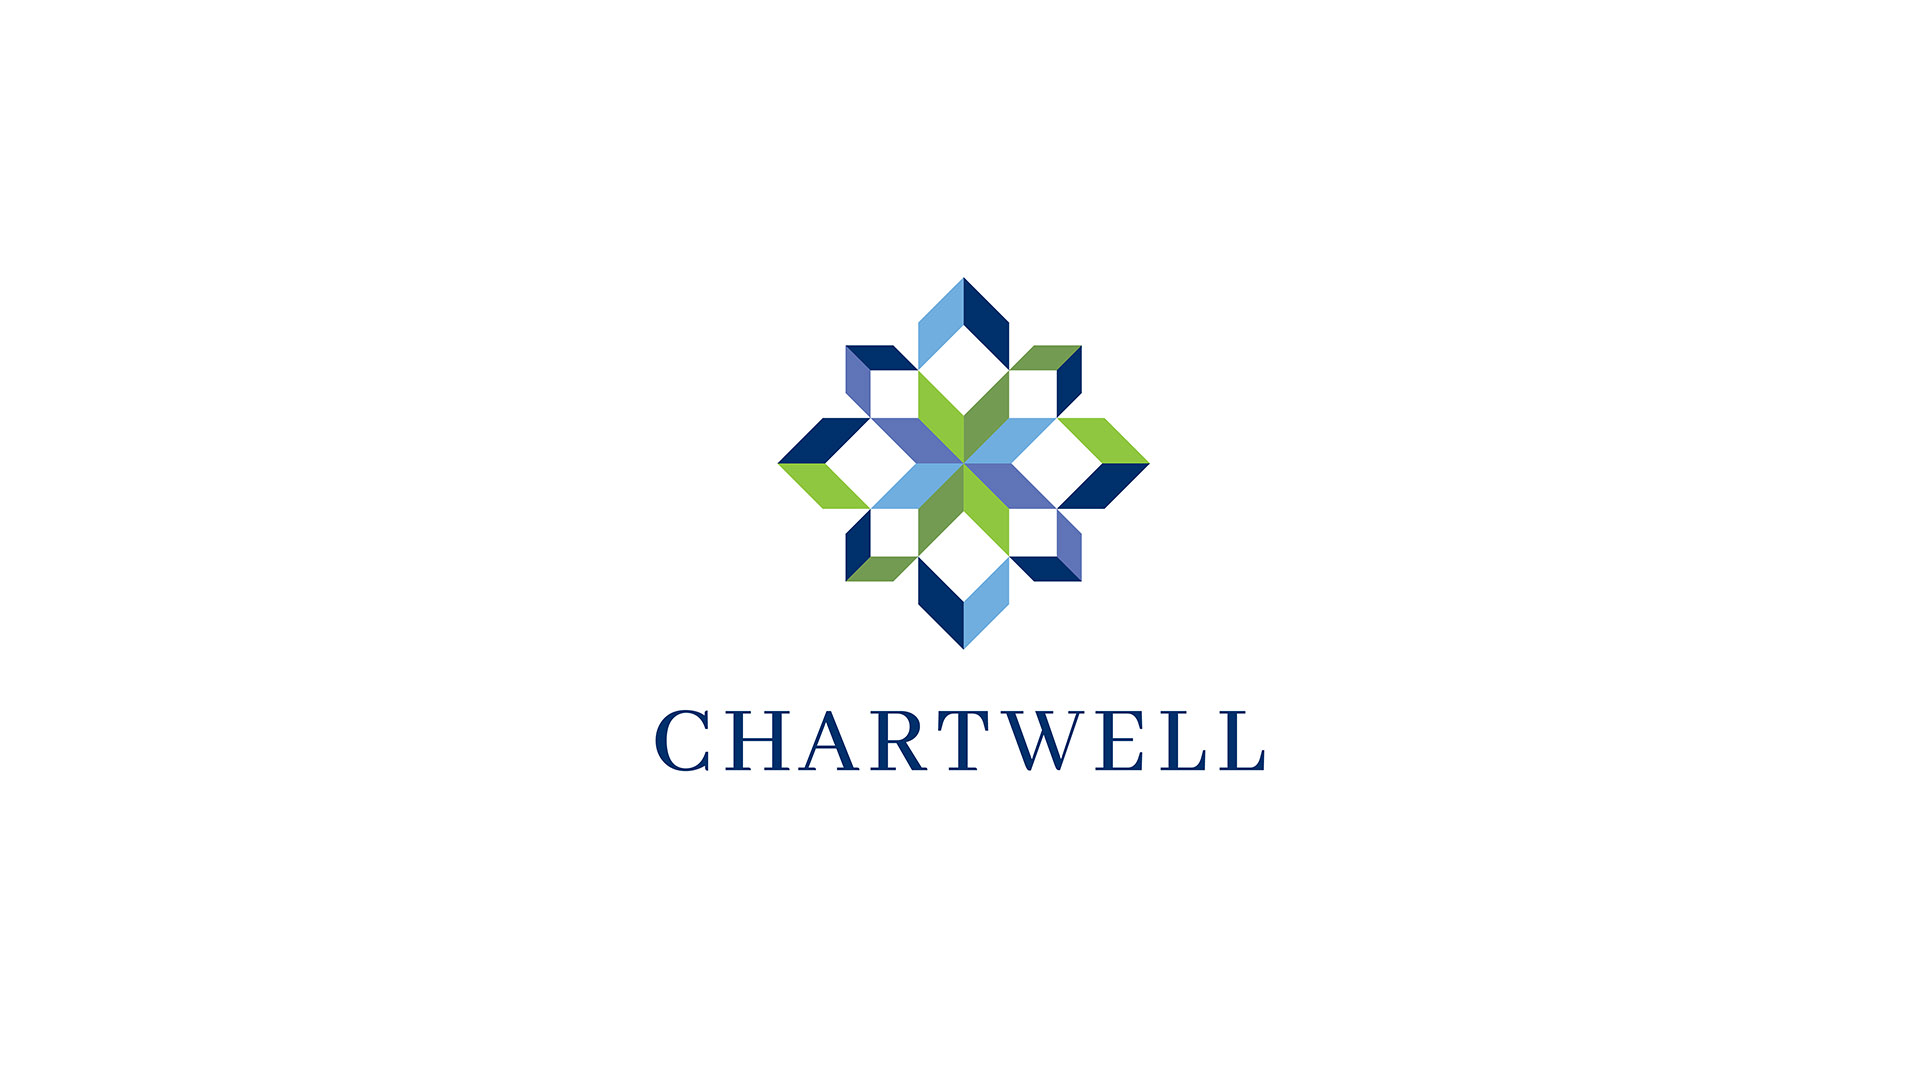 chartwell logo on white